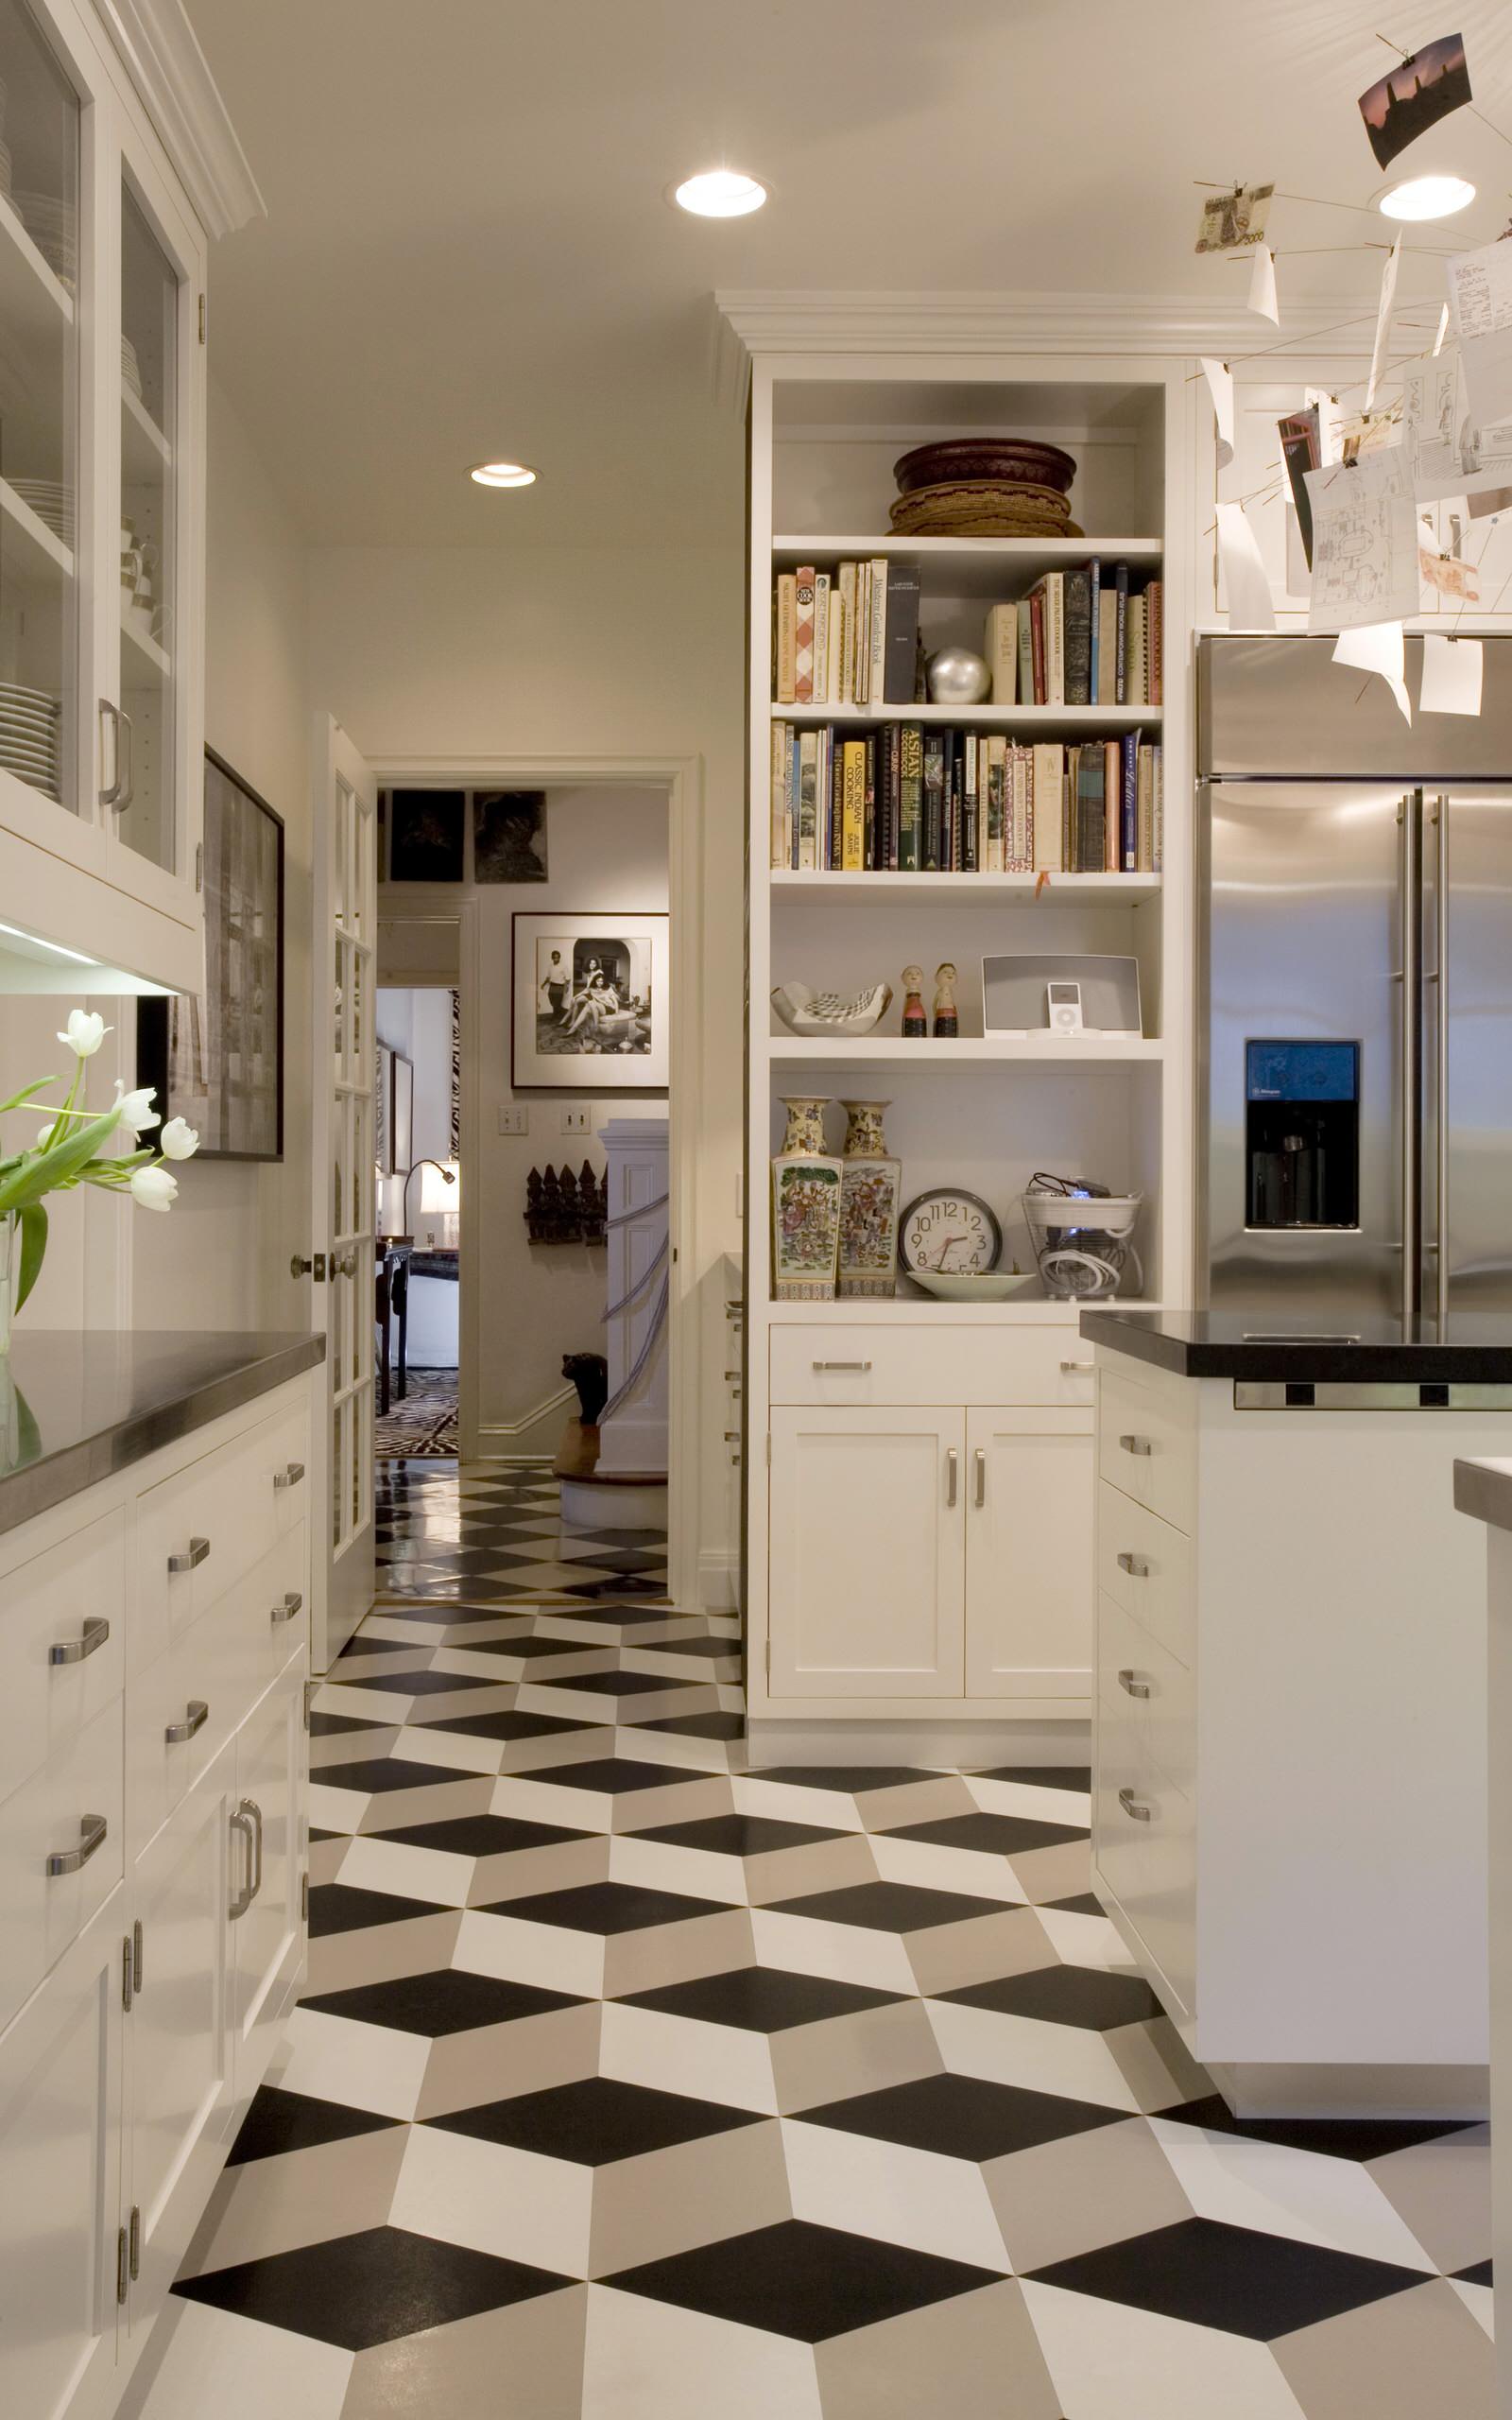 White Tile Floor Kitchen Ideas, White Tile Kitchen Floor